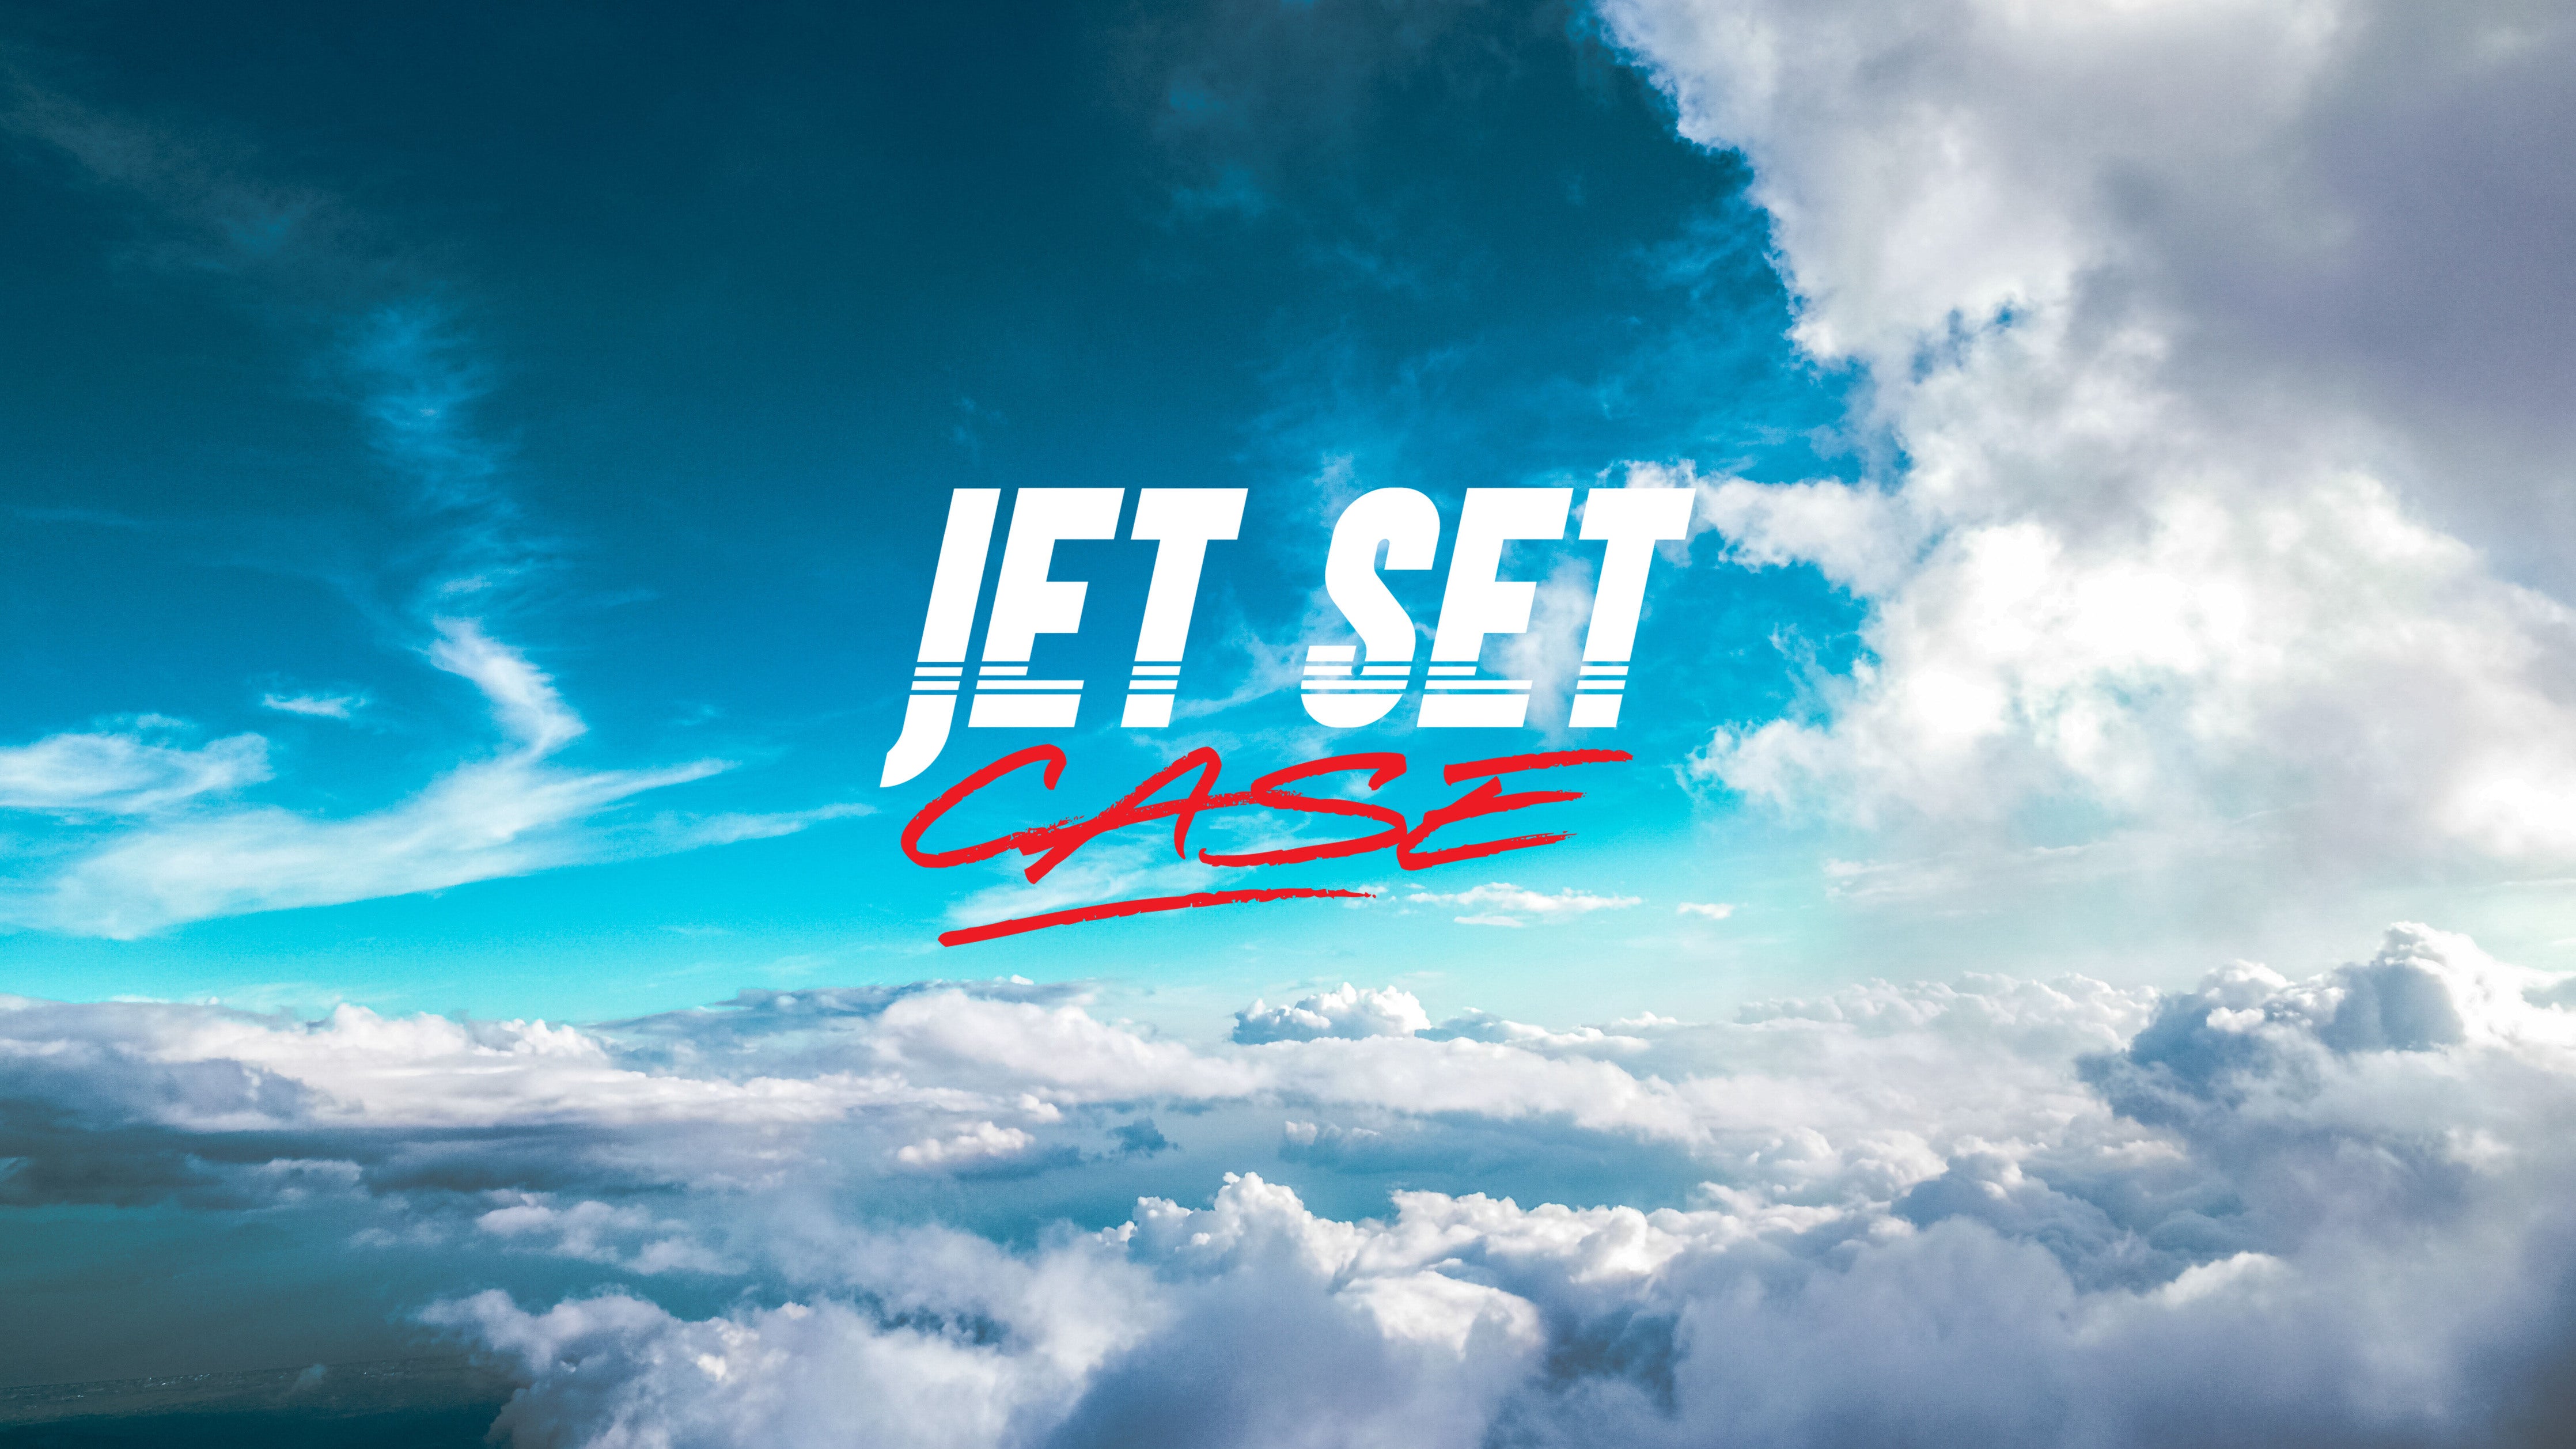 Jet Set Case